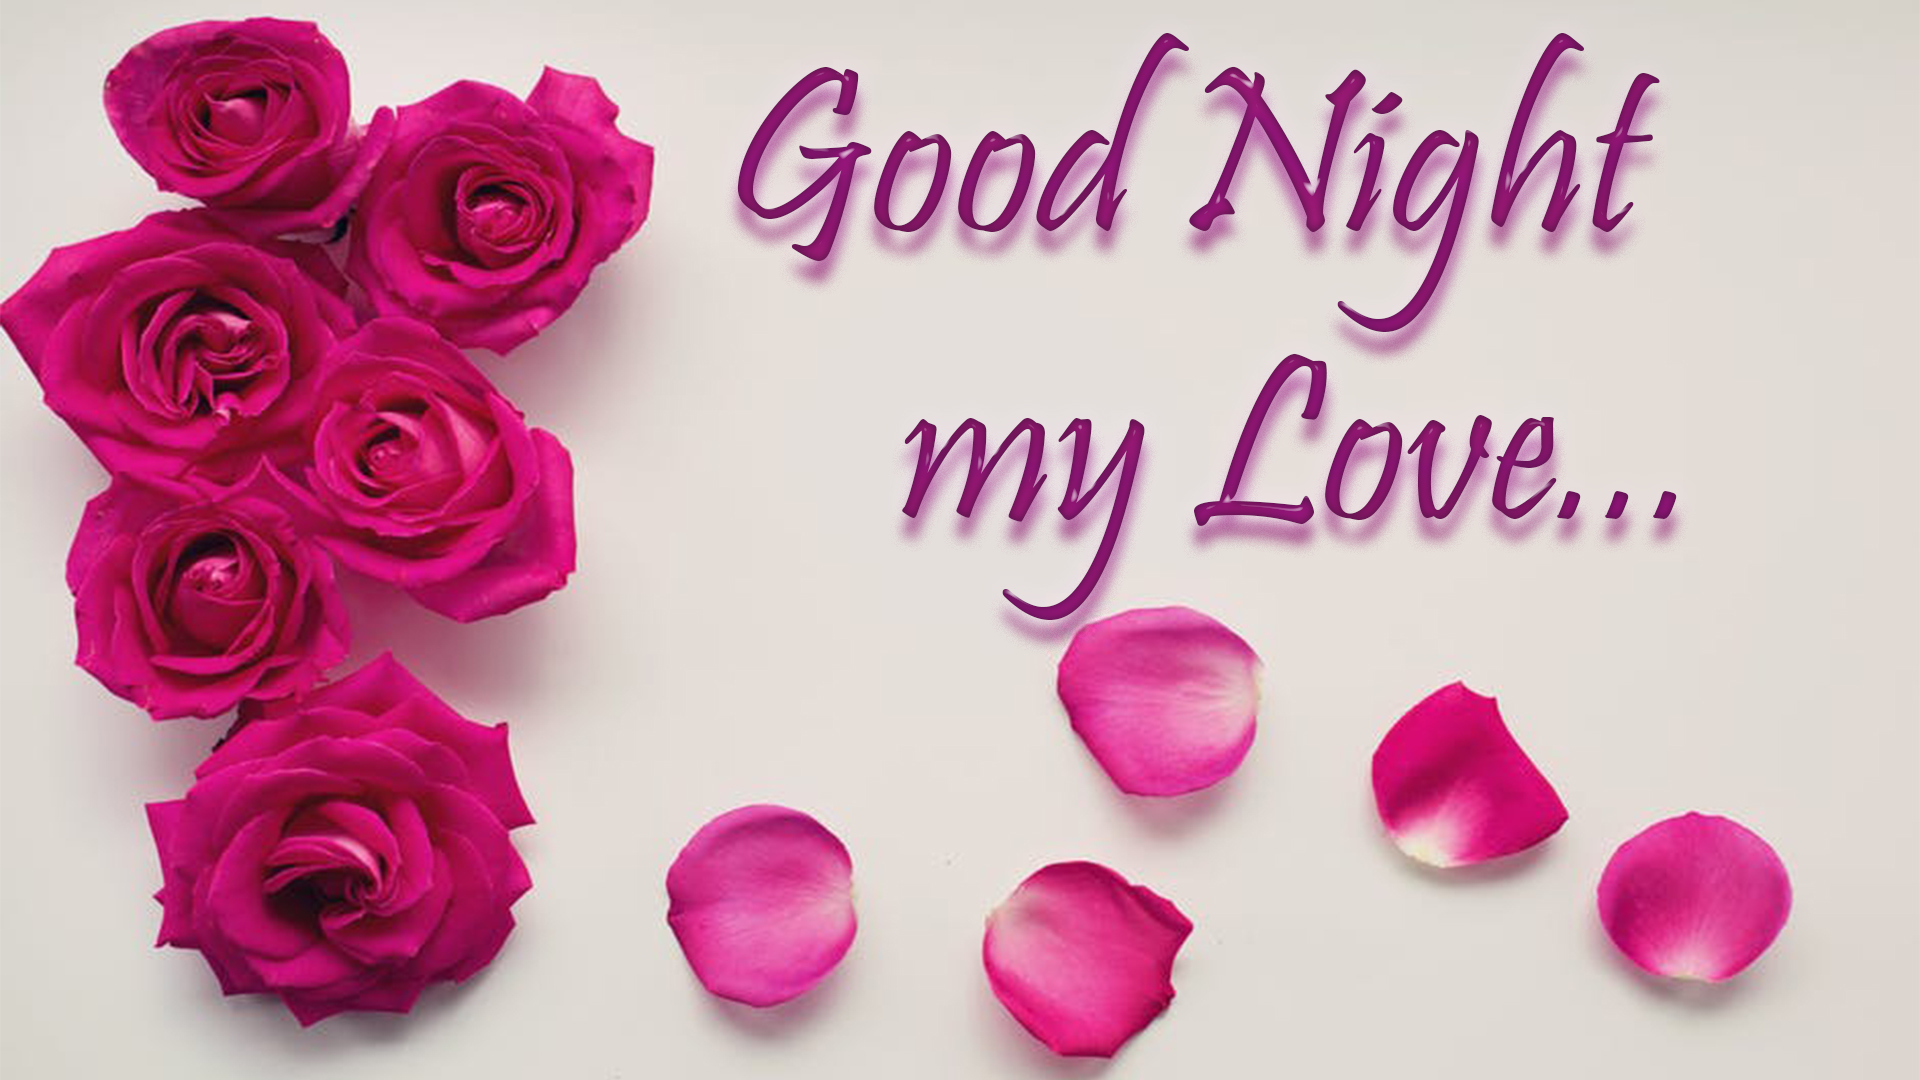 Beautiful Good Night Love HD Images | Good Night Wishes